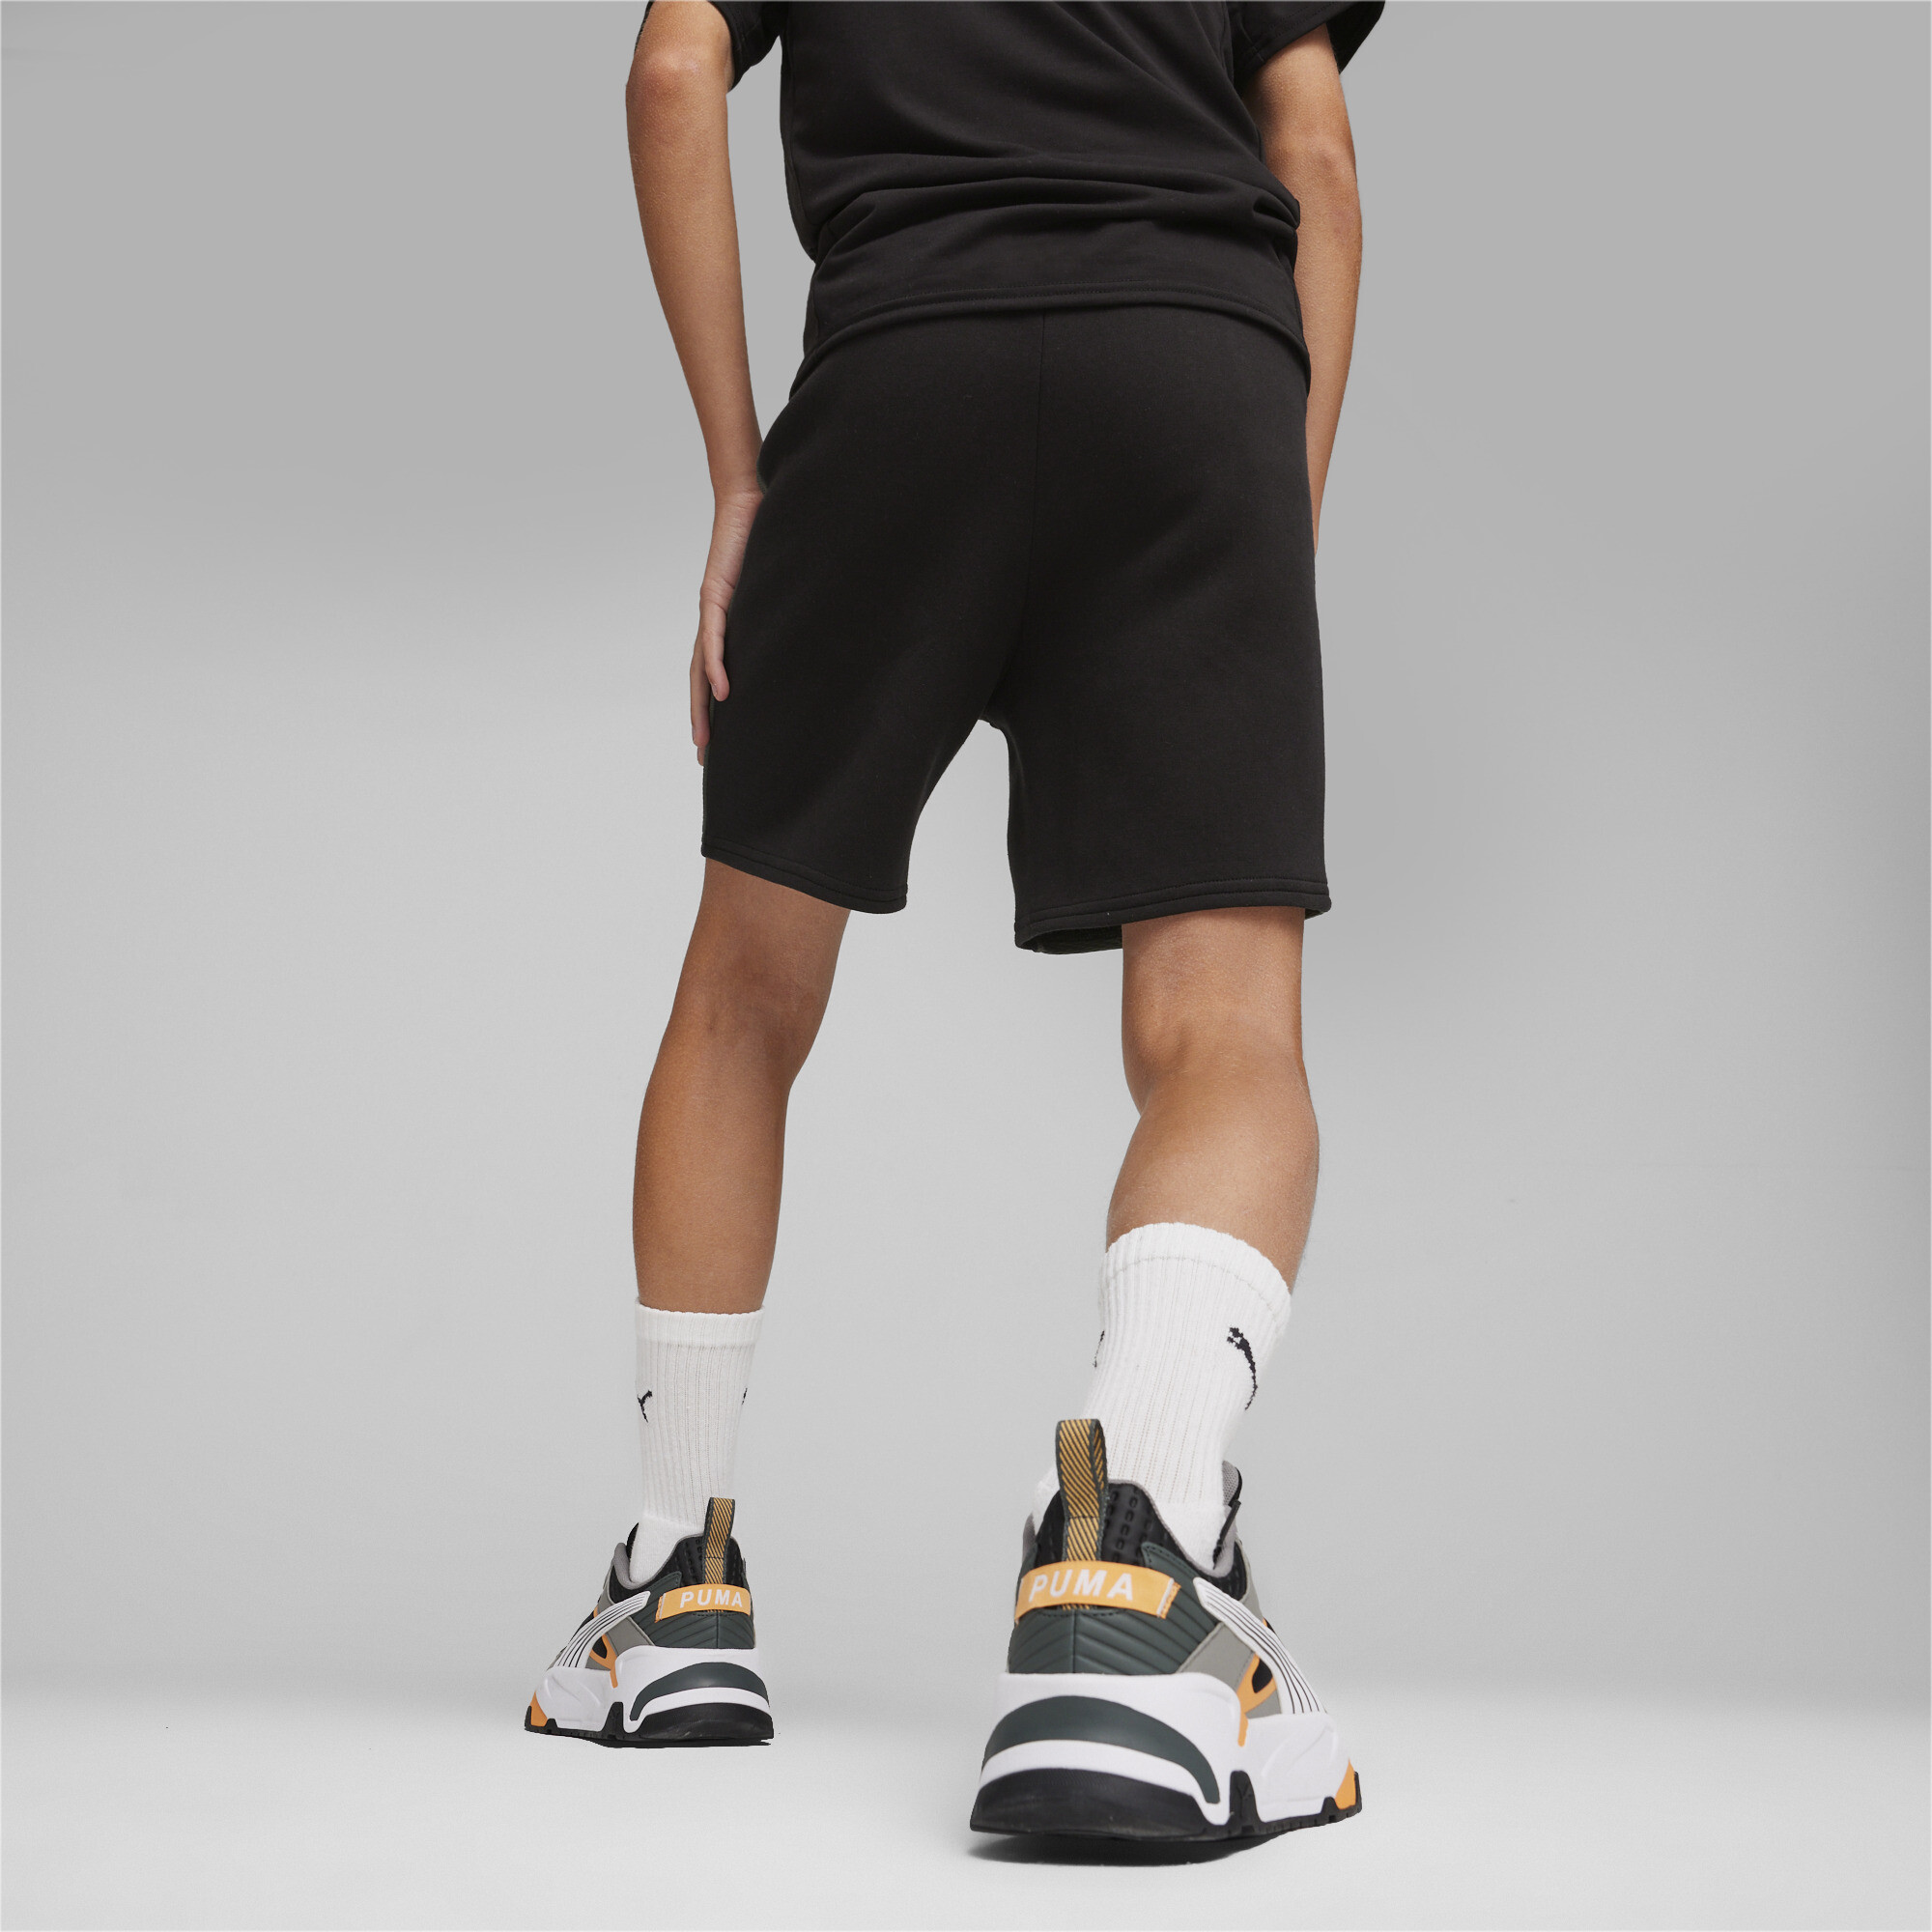 PUMA EVOSTRIPE Shorts In Black, Size 9-10 Youth